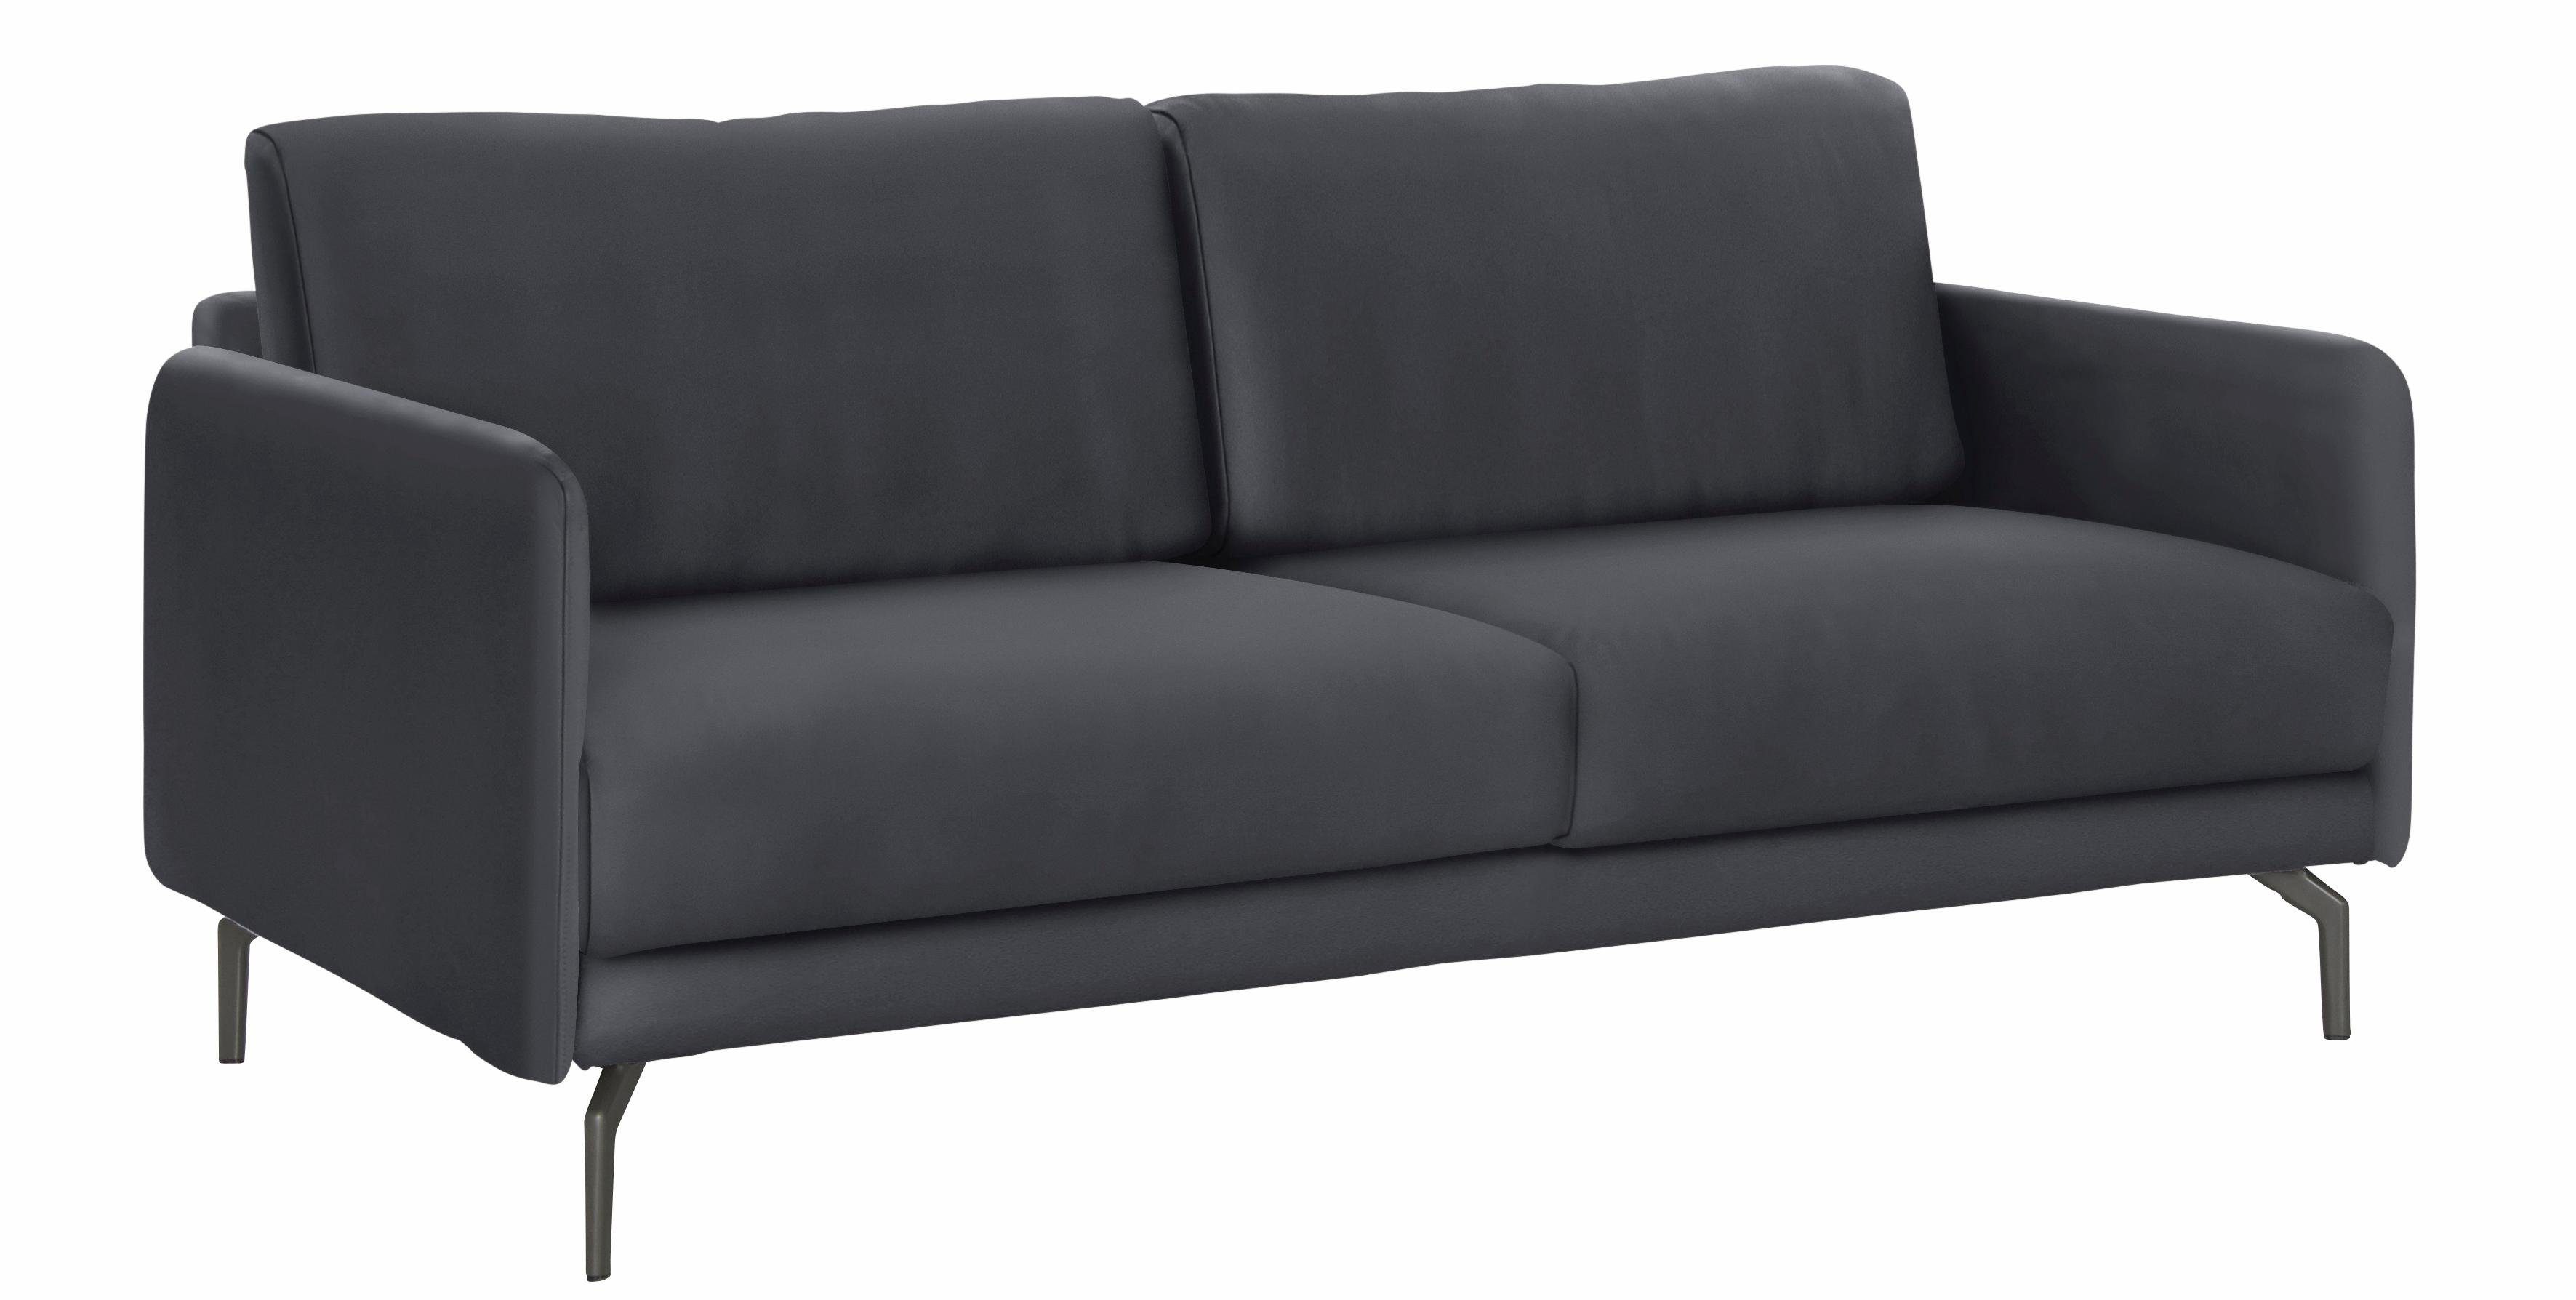 Alugussfüße in Breite hülsta 2-Sitzer 150 sofa cm schmal, umbragrau, Armlehne sehr hs.450,